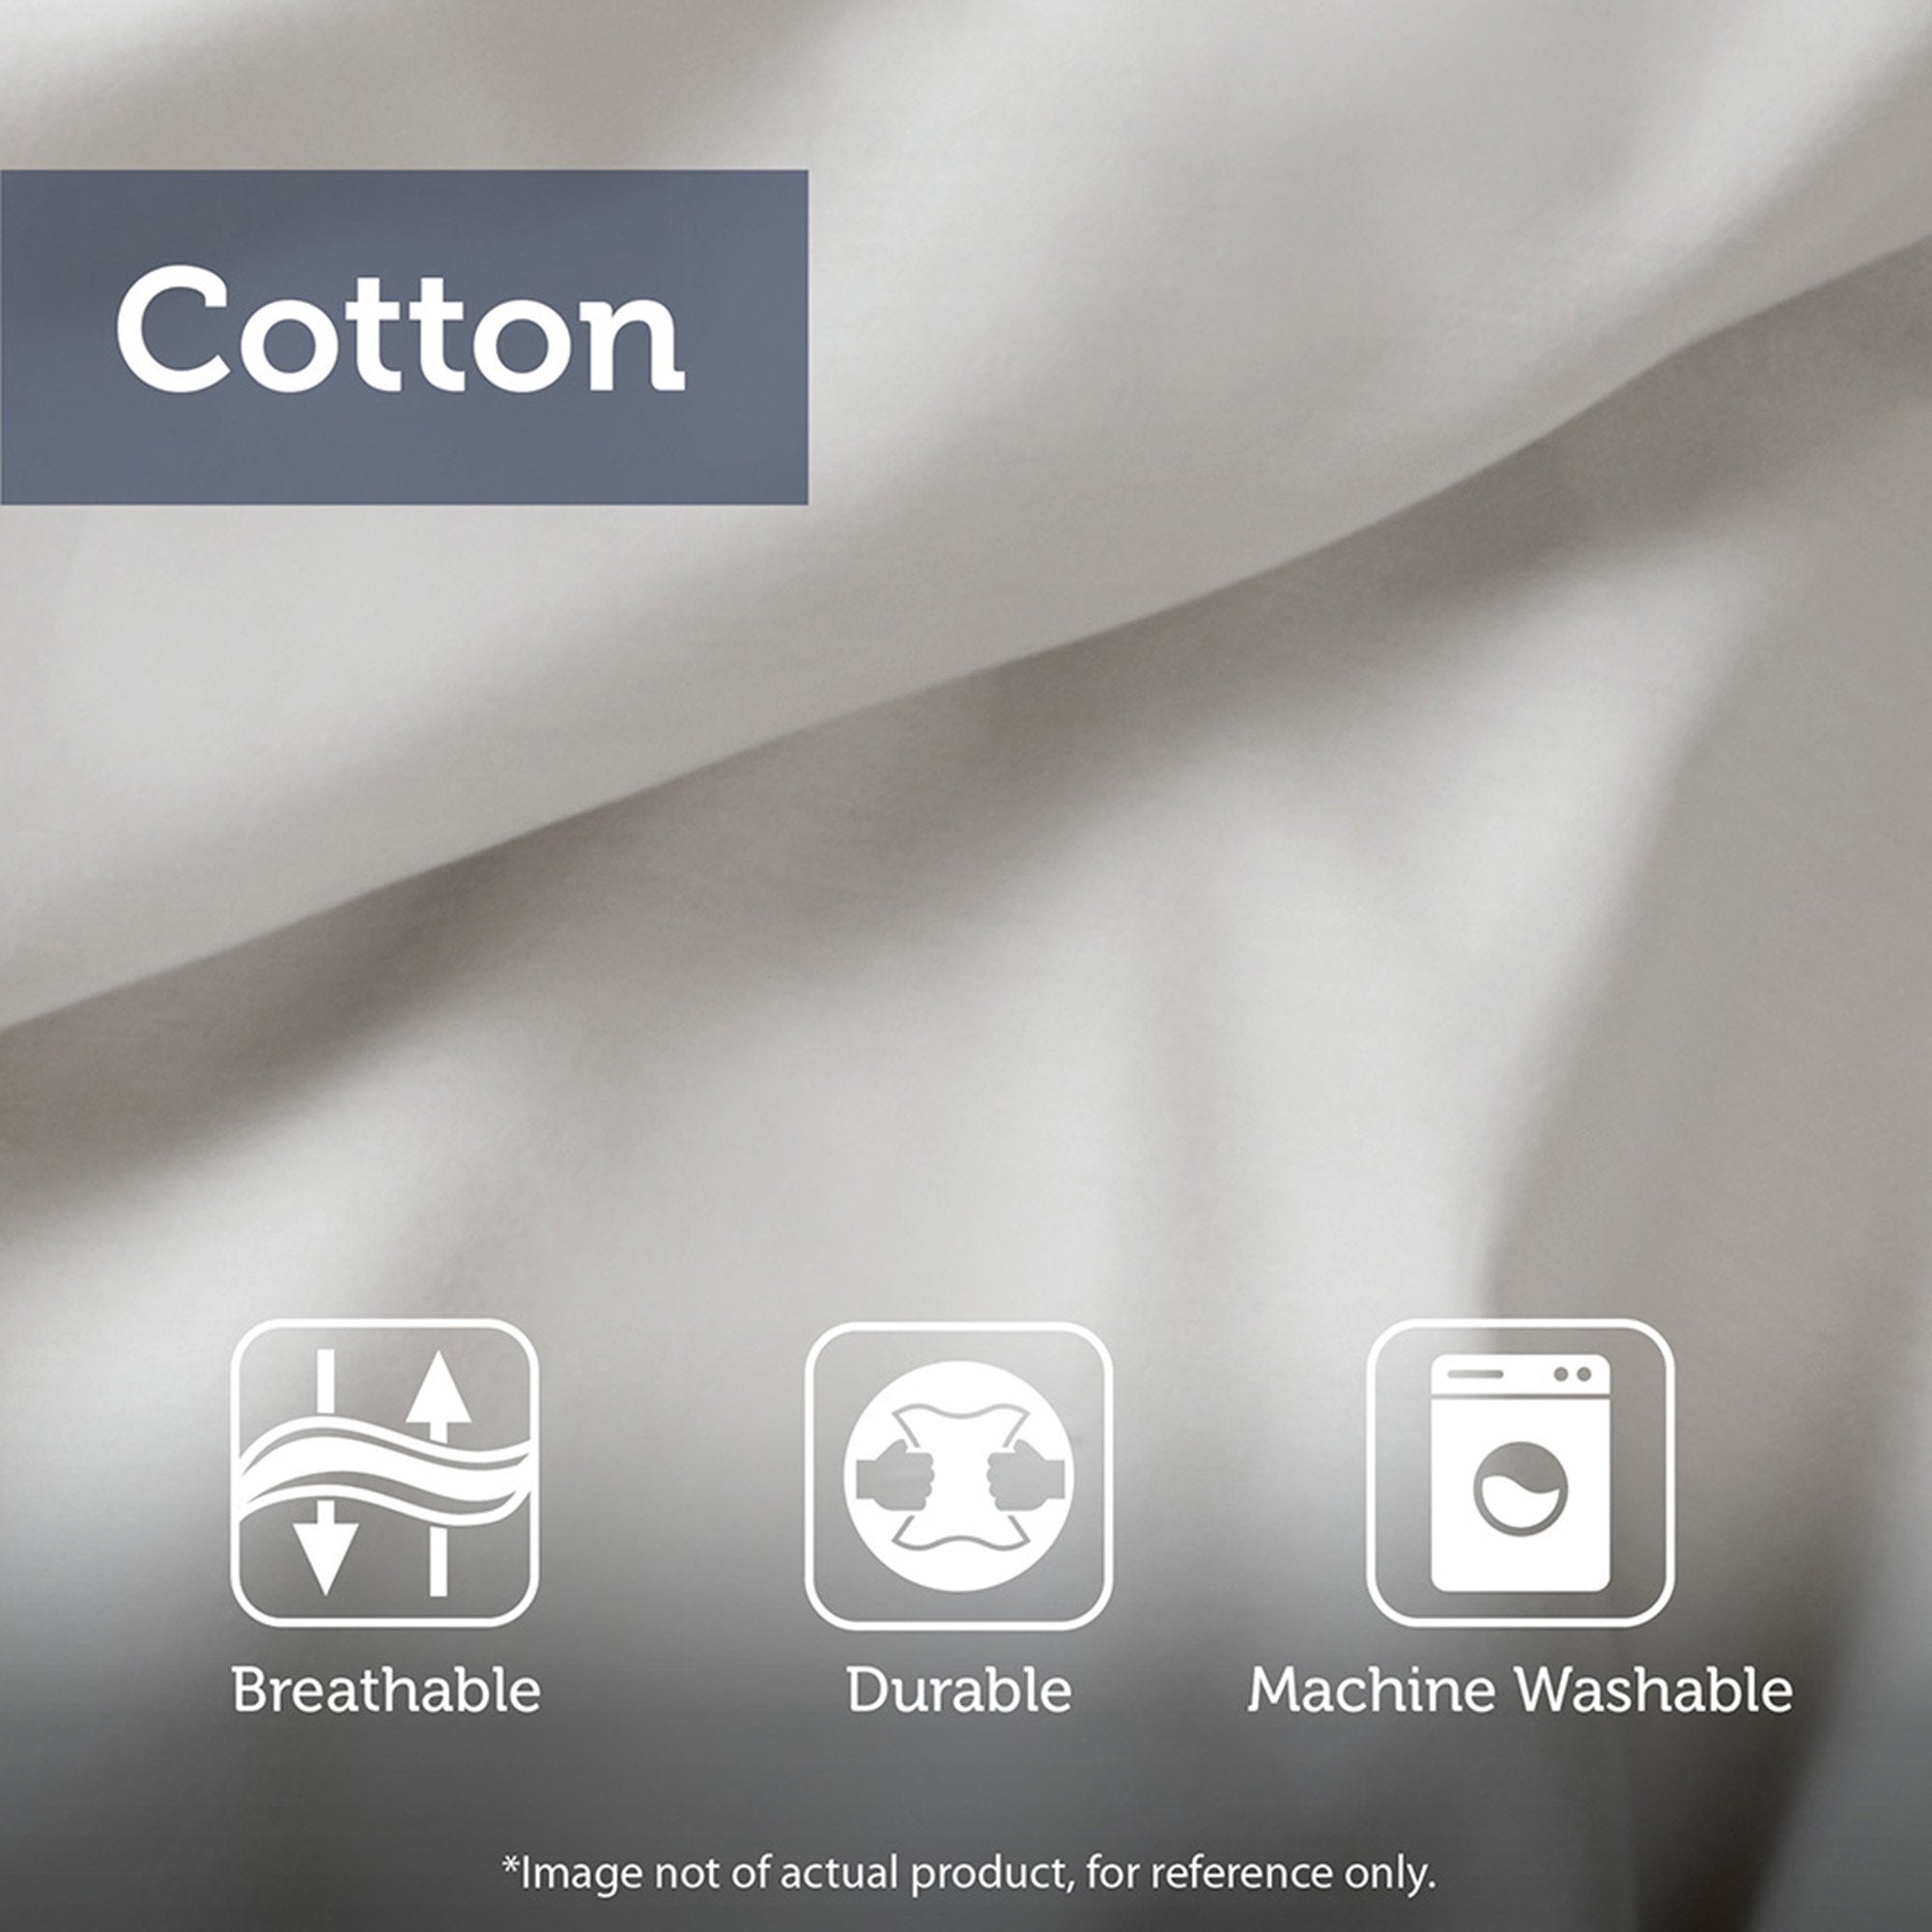 Laetitia Grey 3-Piece Comforter Set Comforter Sets By Olliix/JLA HOME (E & E Co., Ltd)